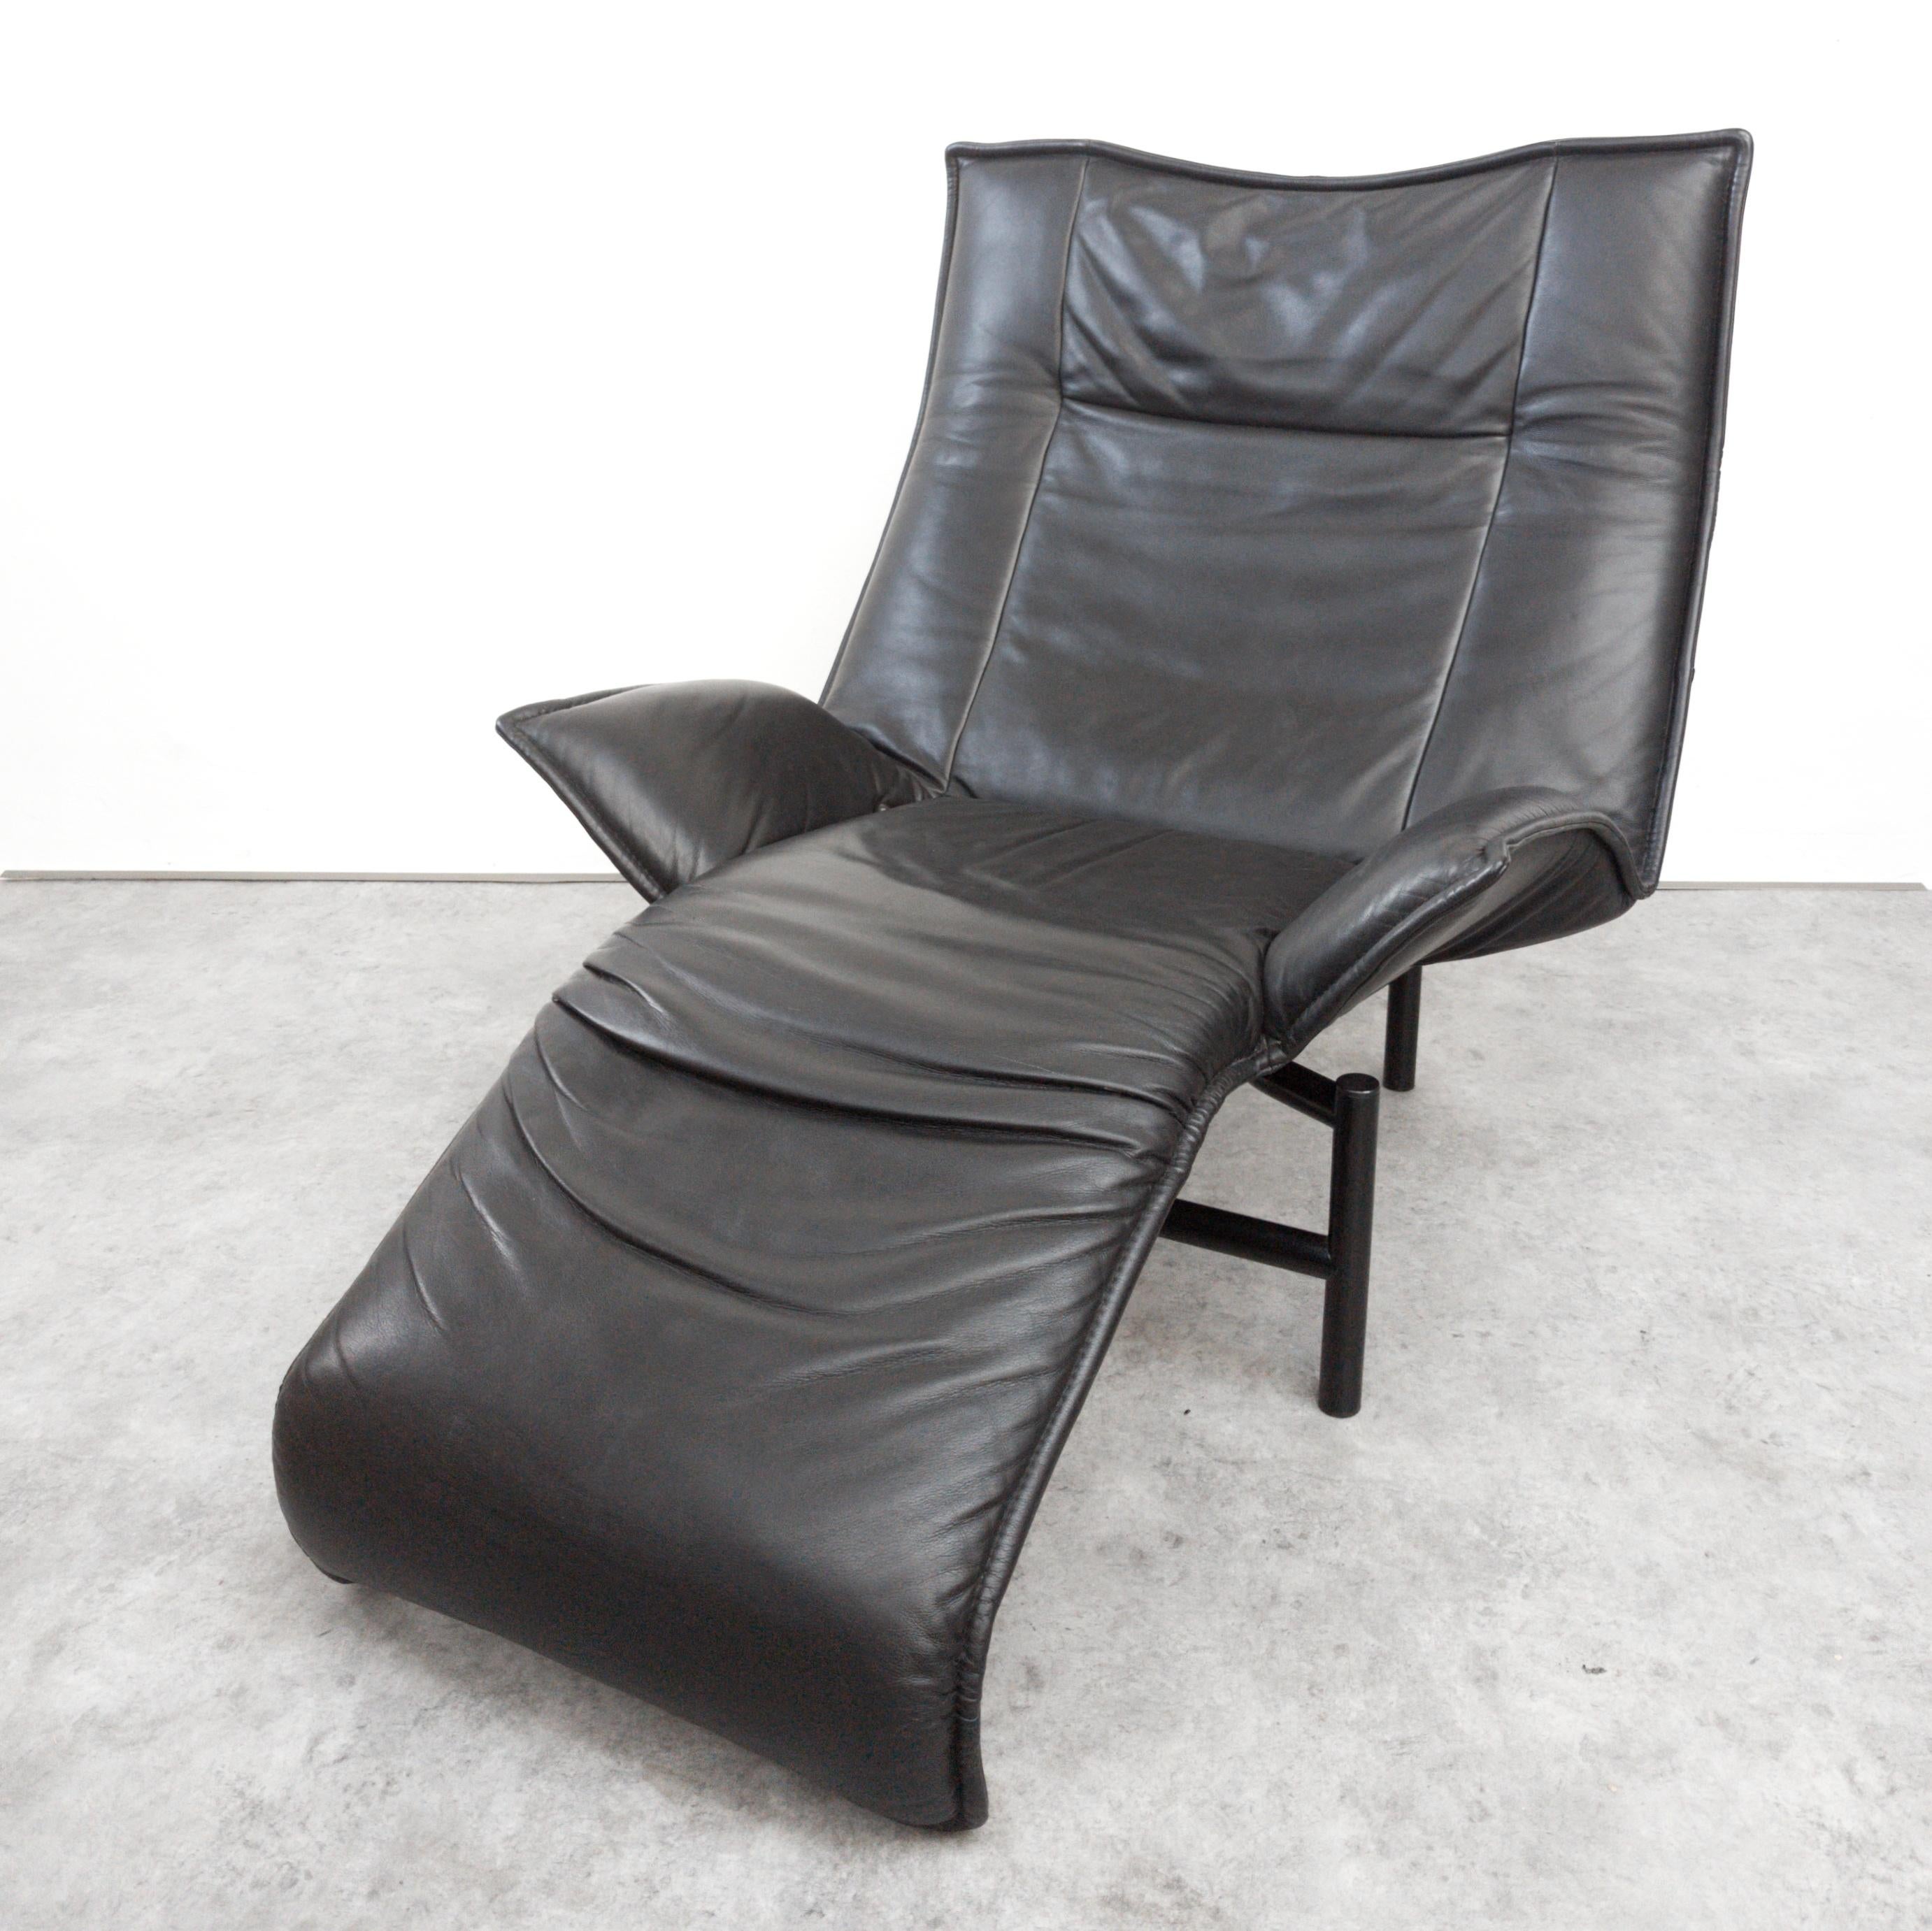 Modern Veranda Adjustable Lounge Chair by Vico Magistretti for Cassina